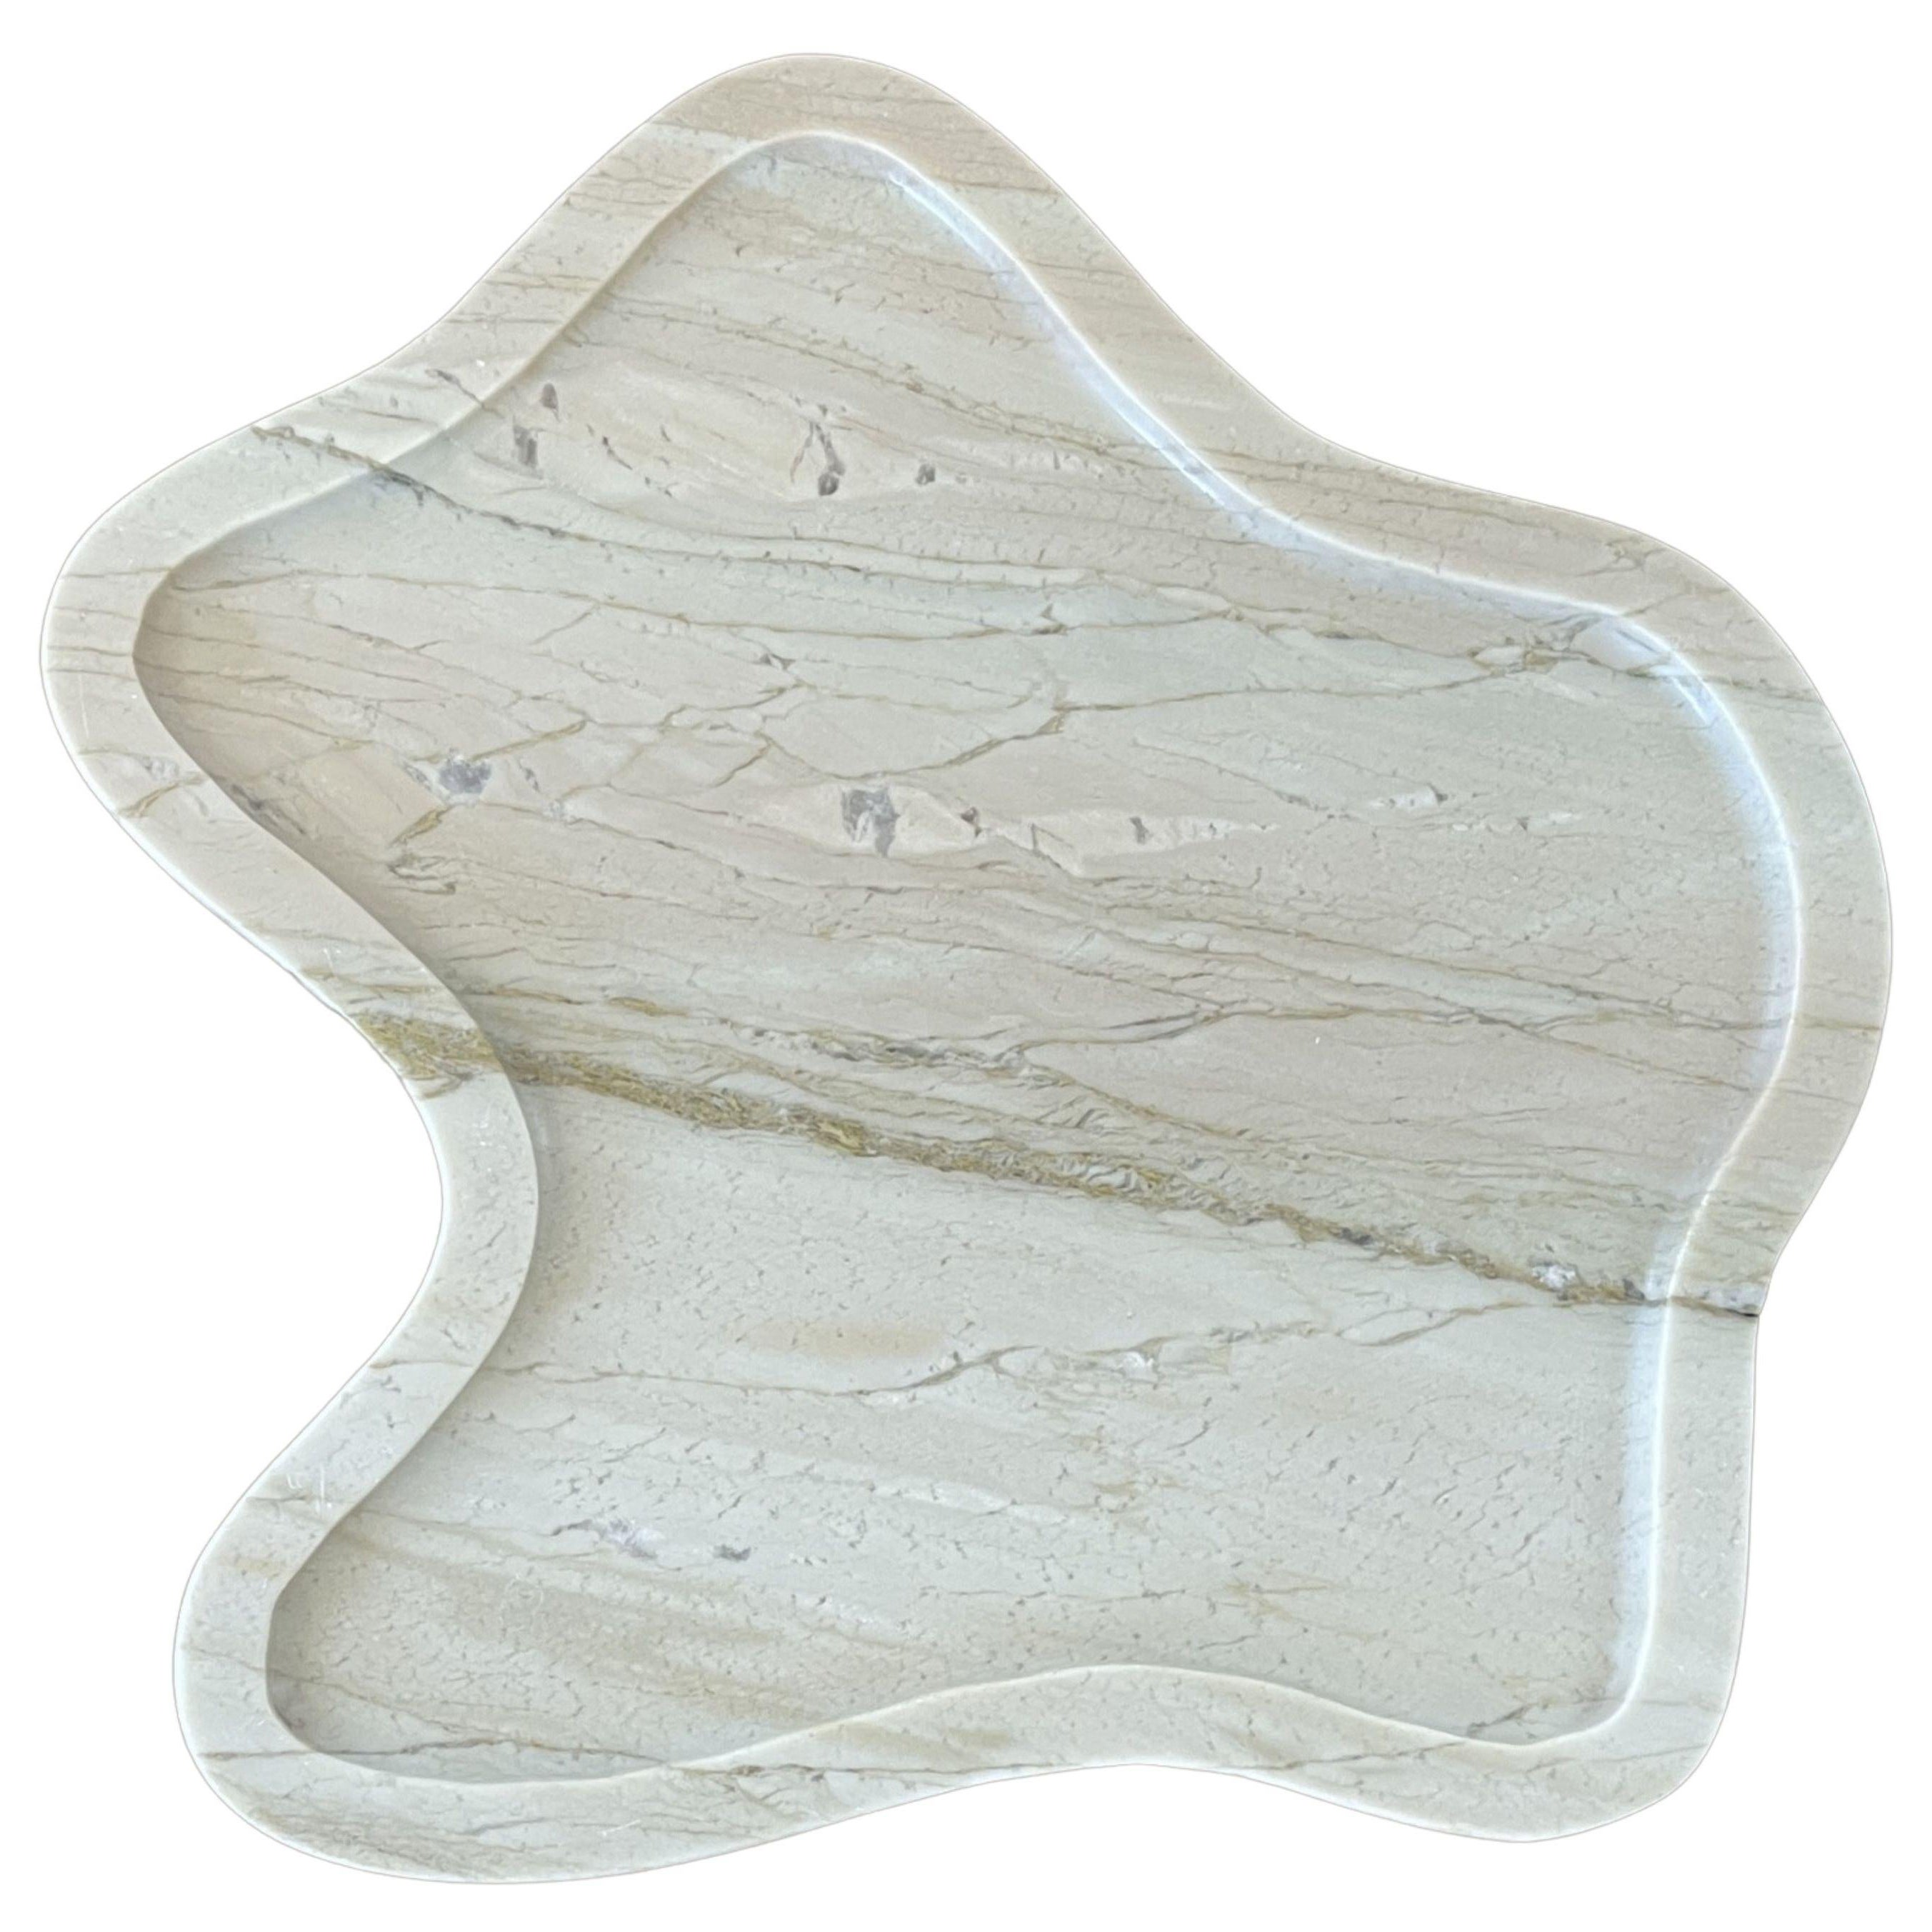 Flo Tray: Organic-shaped Tray in Matcha by Anastasio Home